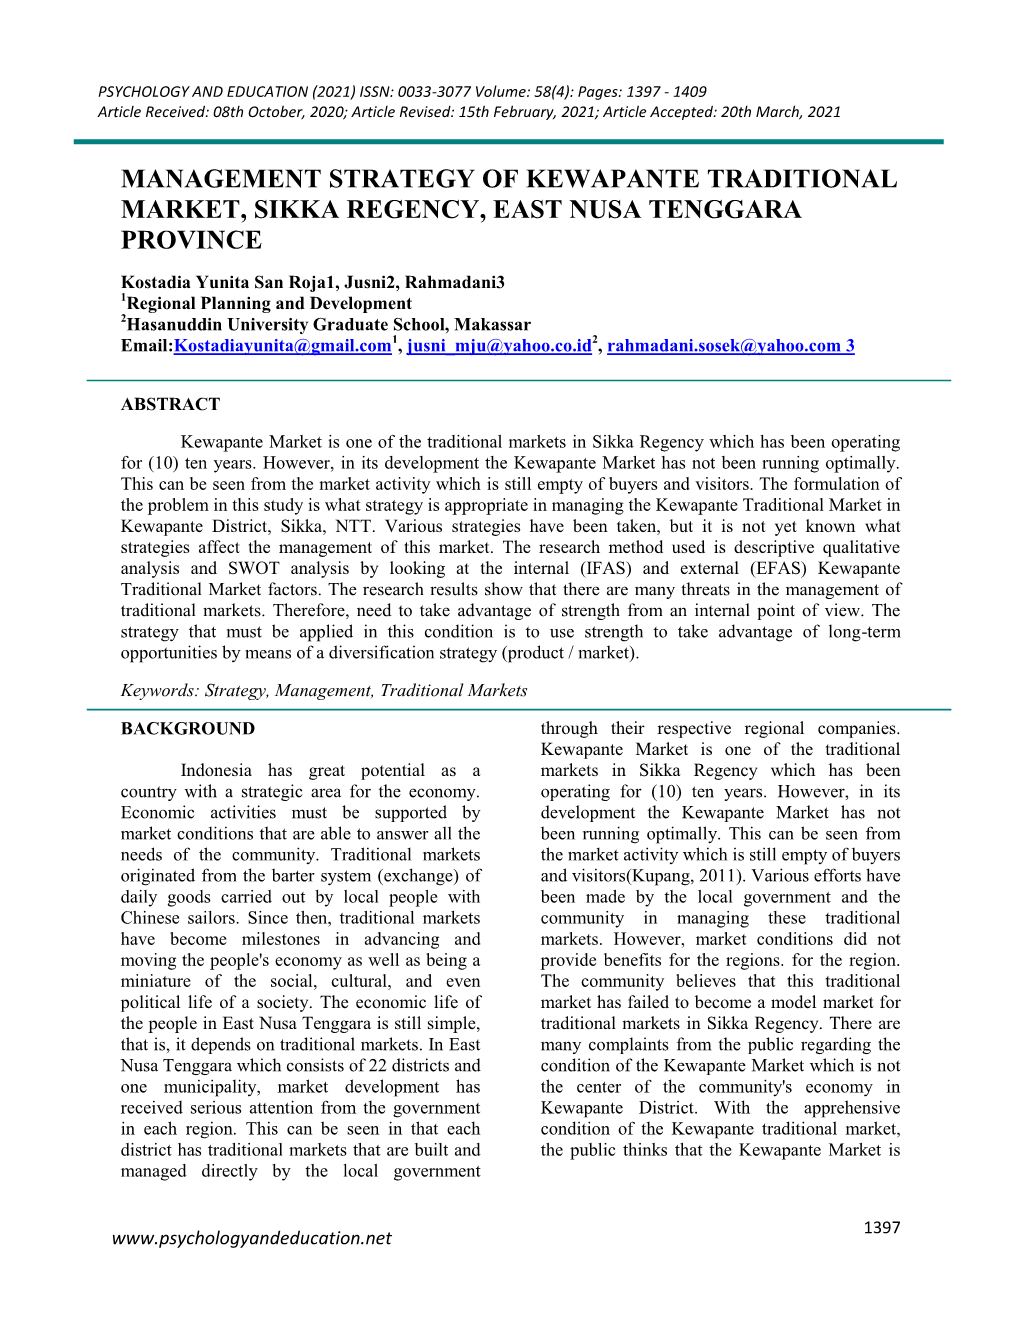 Management Strategy of Kewapante Traditional Market, Sikka Regency, East Nusa Tenggara Province